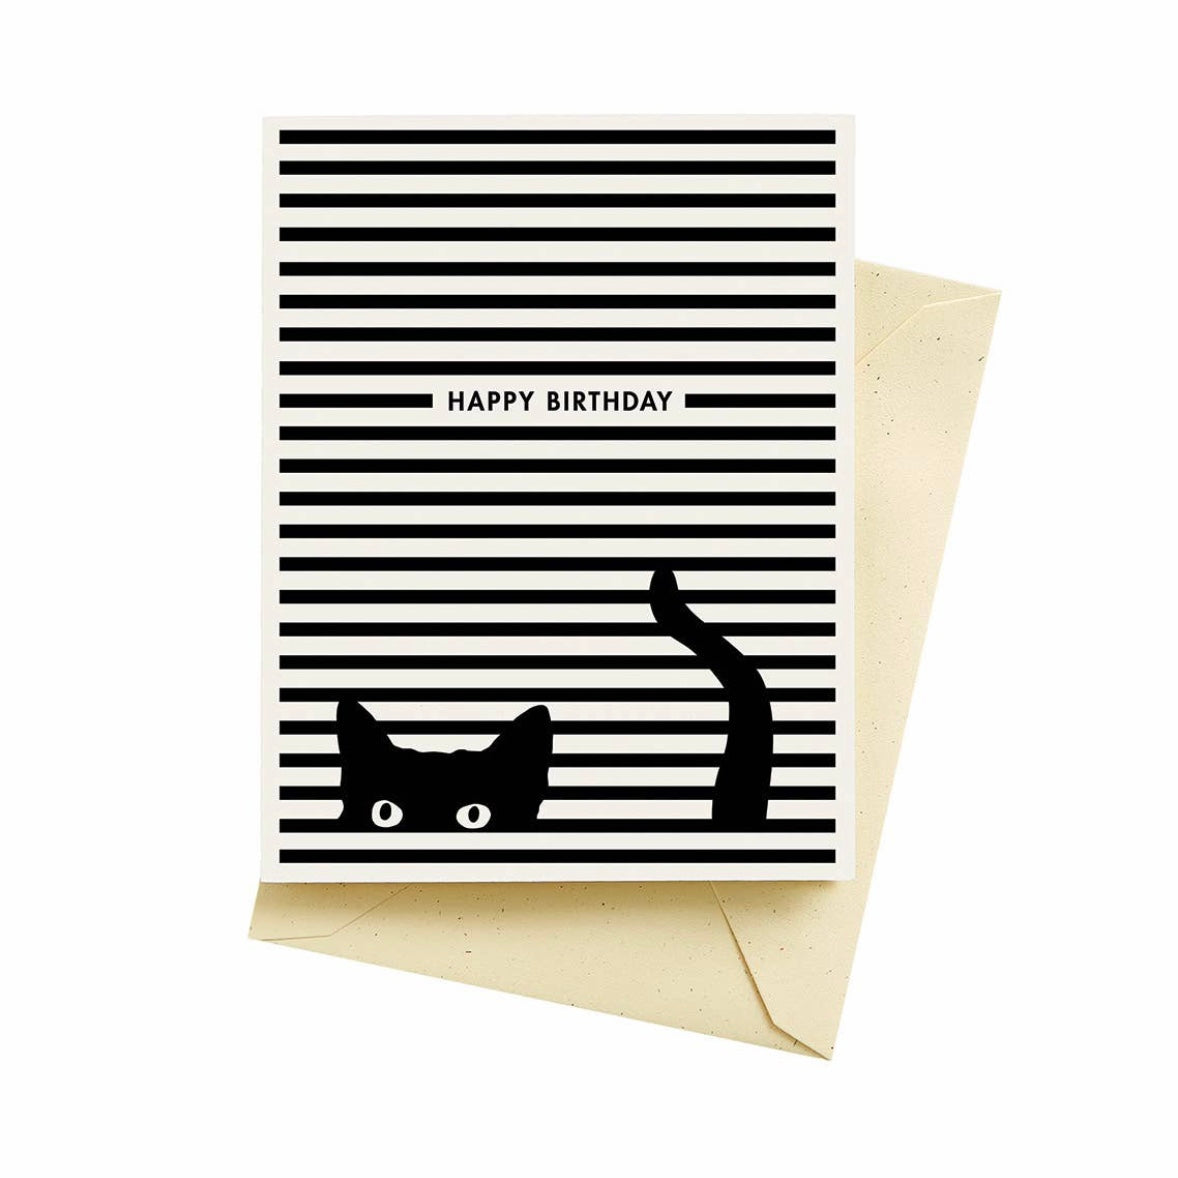 Happy Birthday cat greeting card